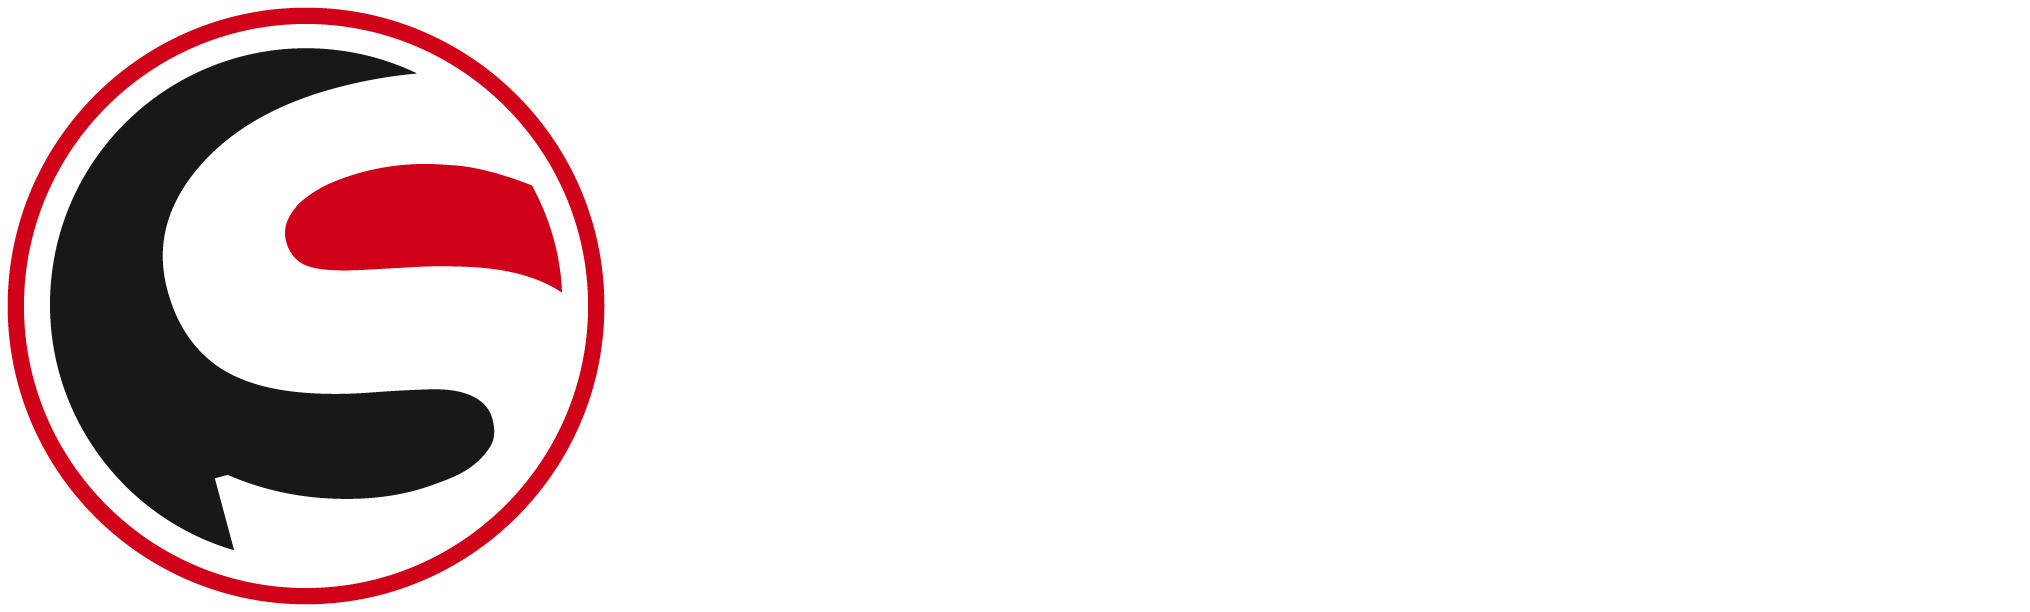 samel marketing